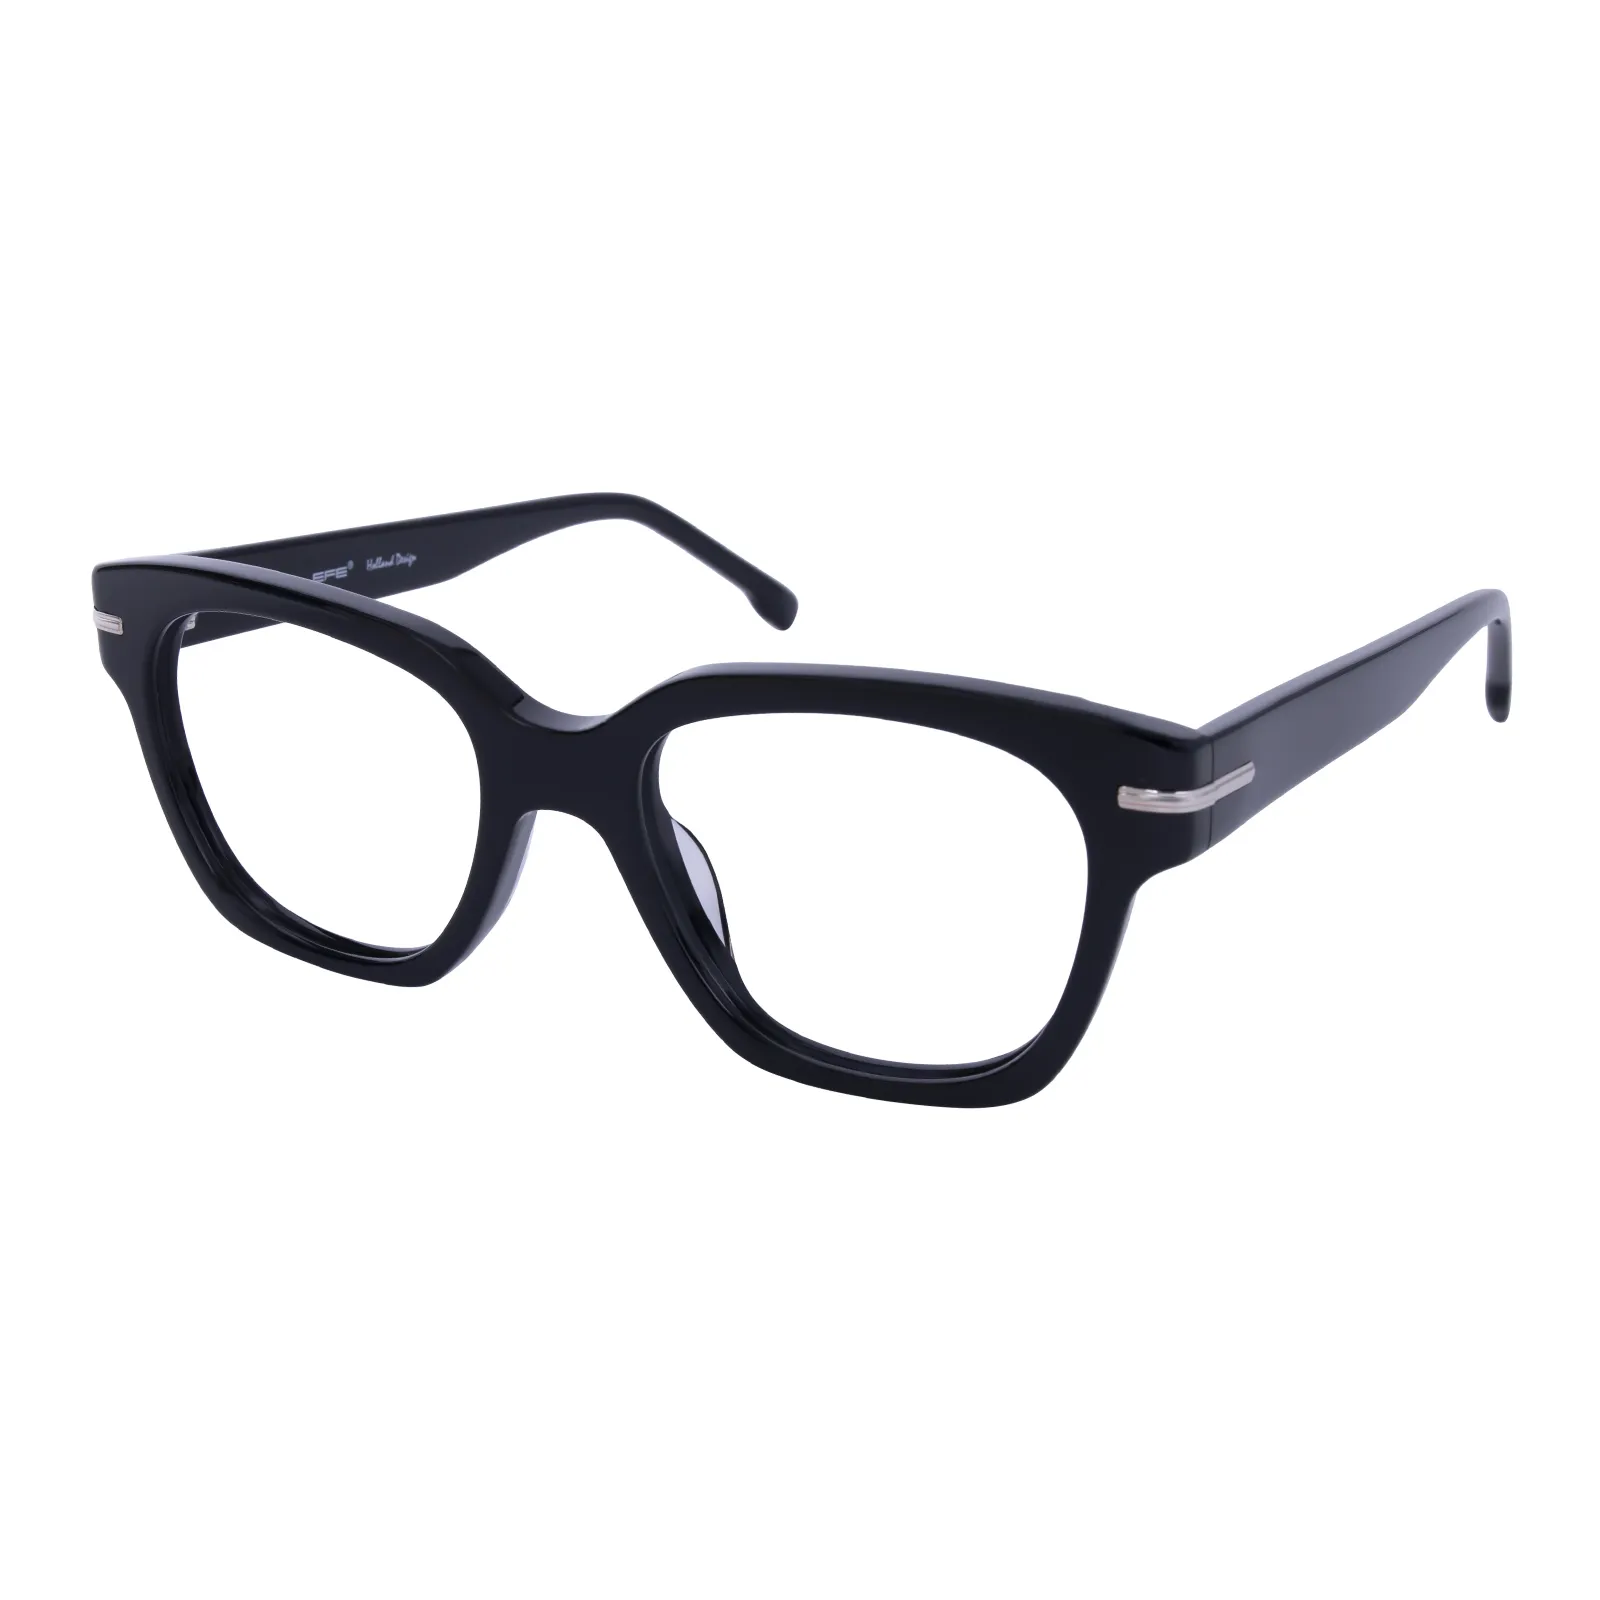 Phyllis - Square Black Glasses for Women